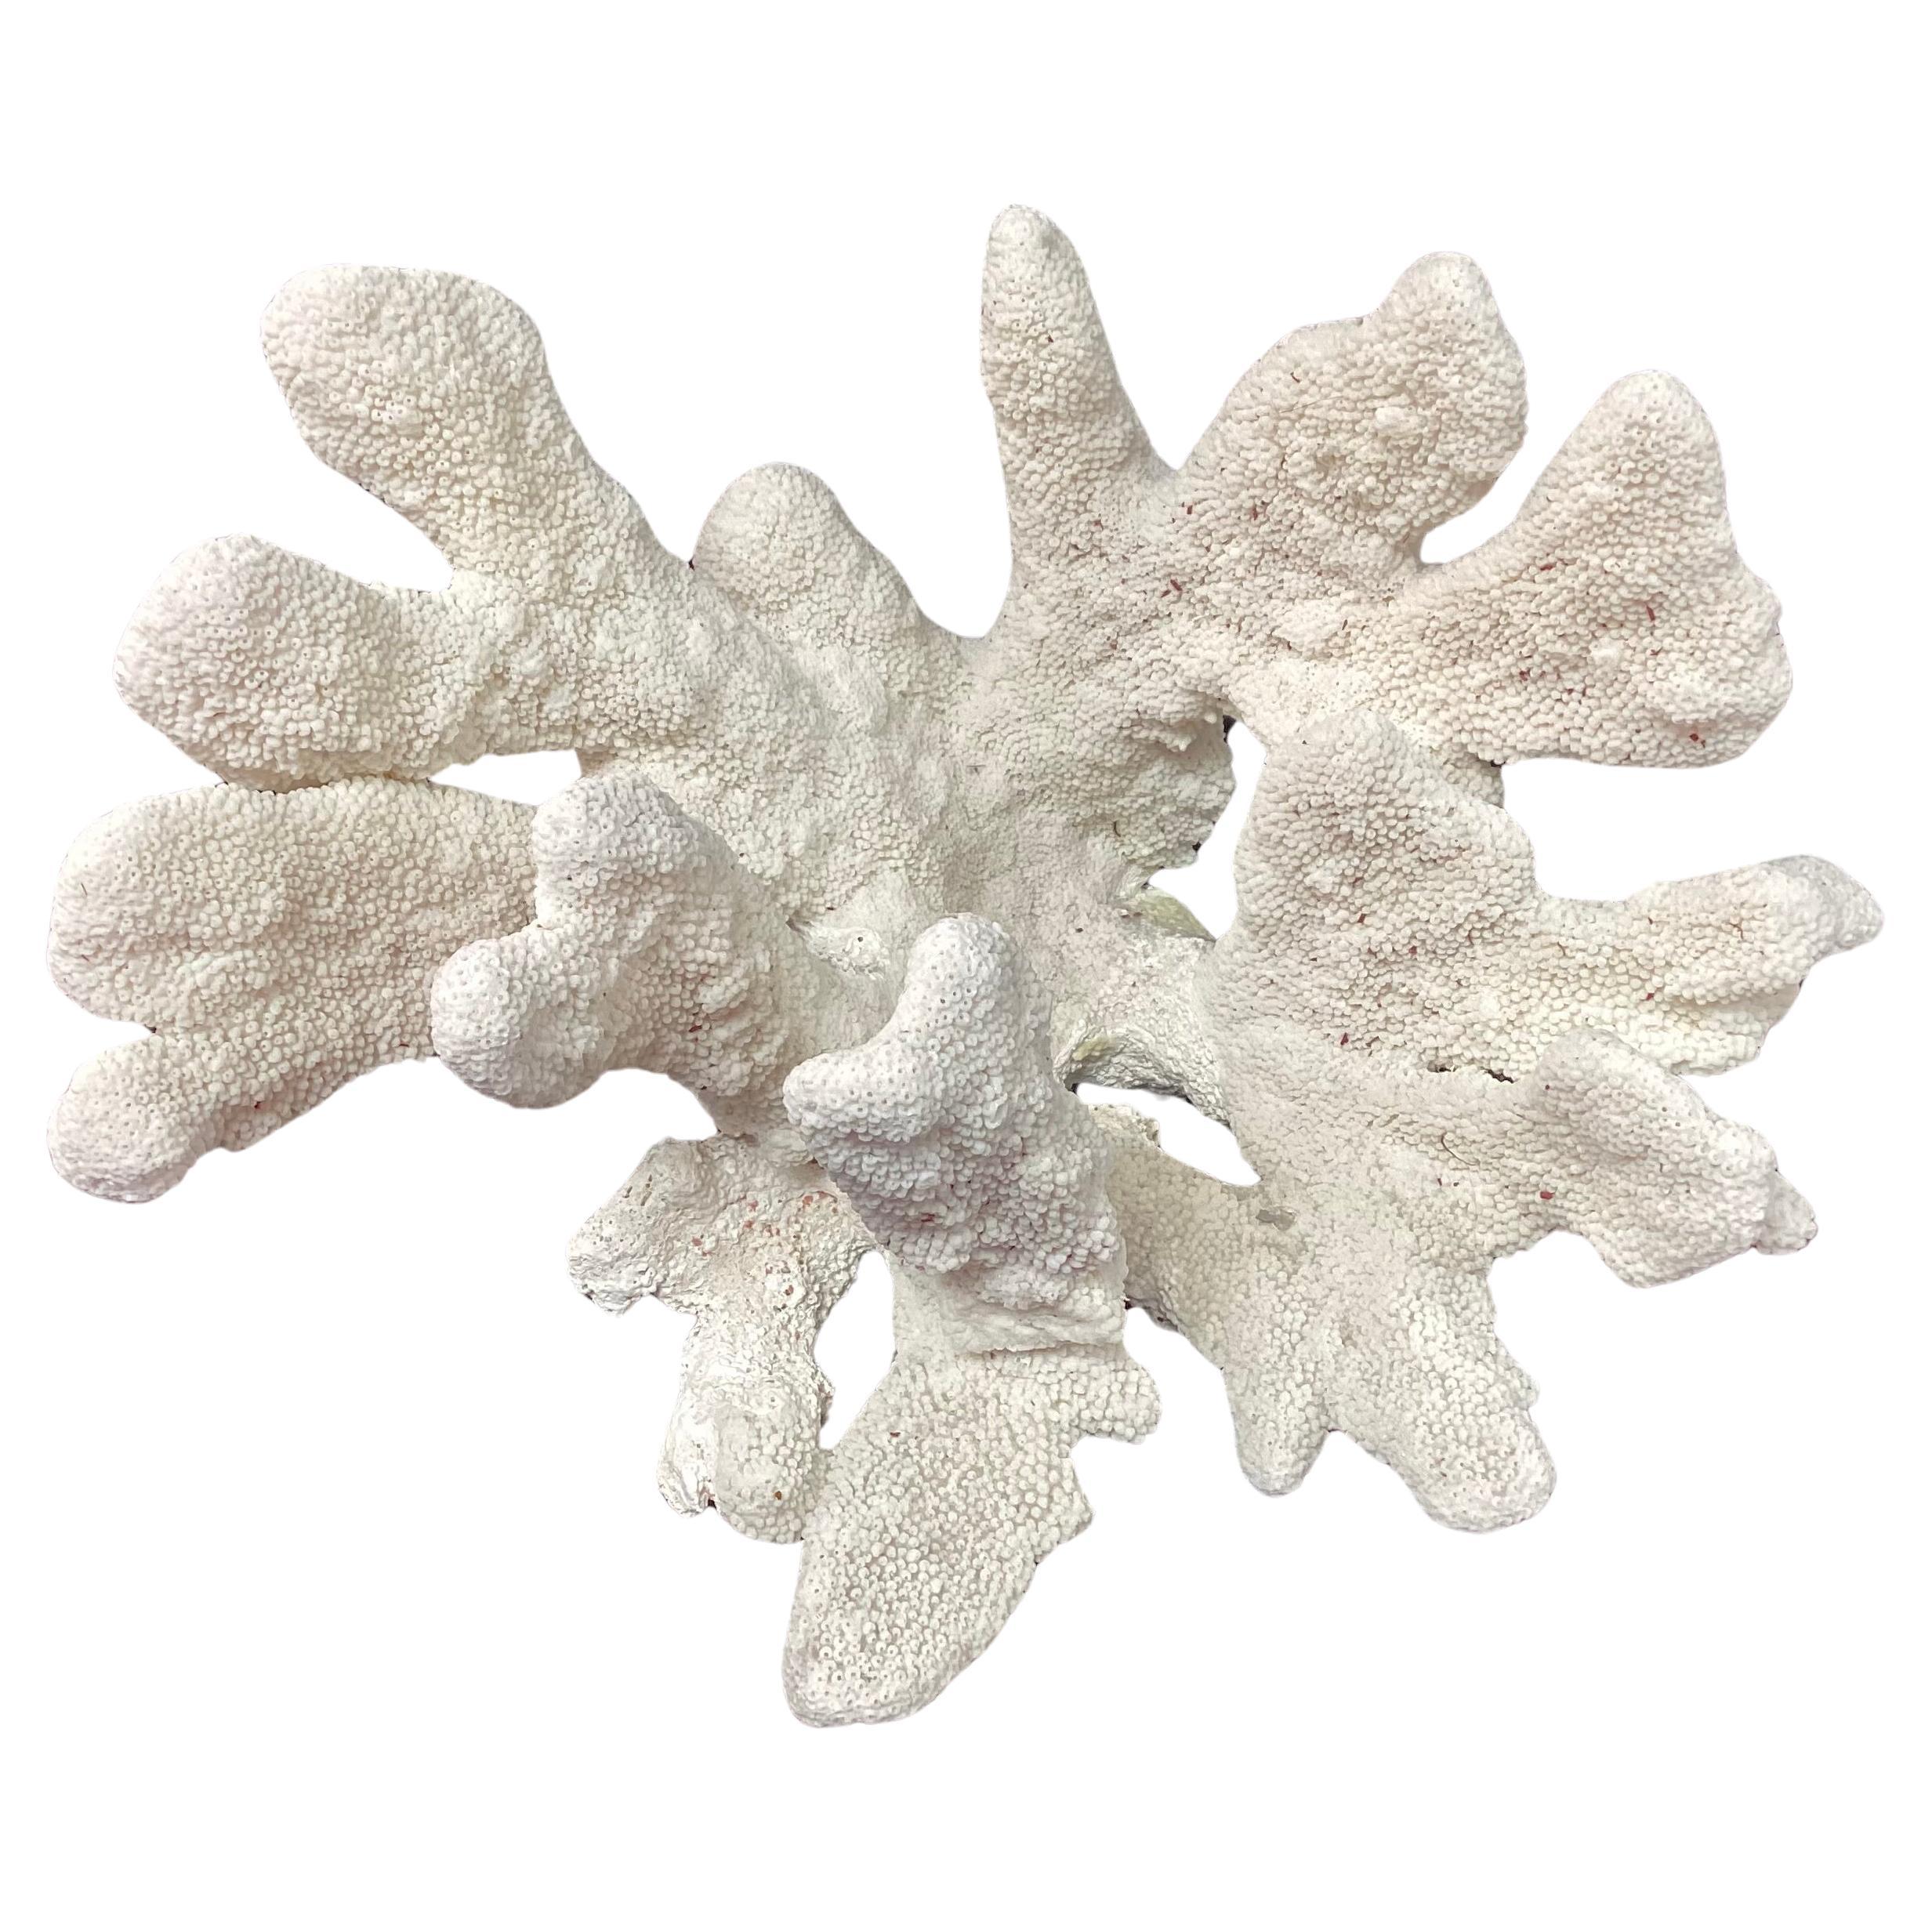 Large Natural White Coral Reef Specimen #4 For Sale 2